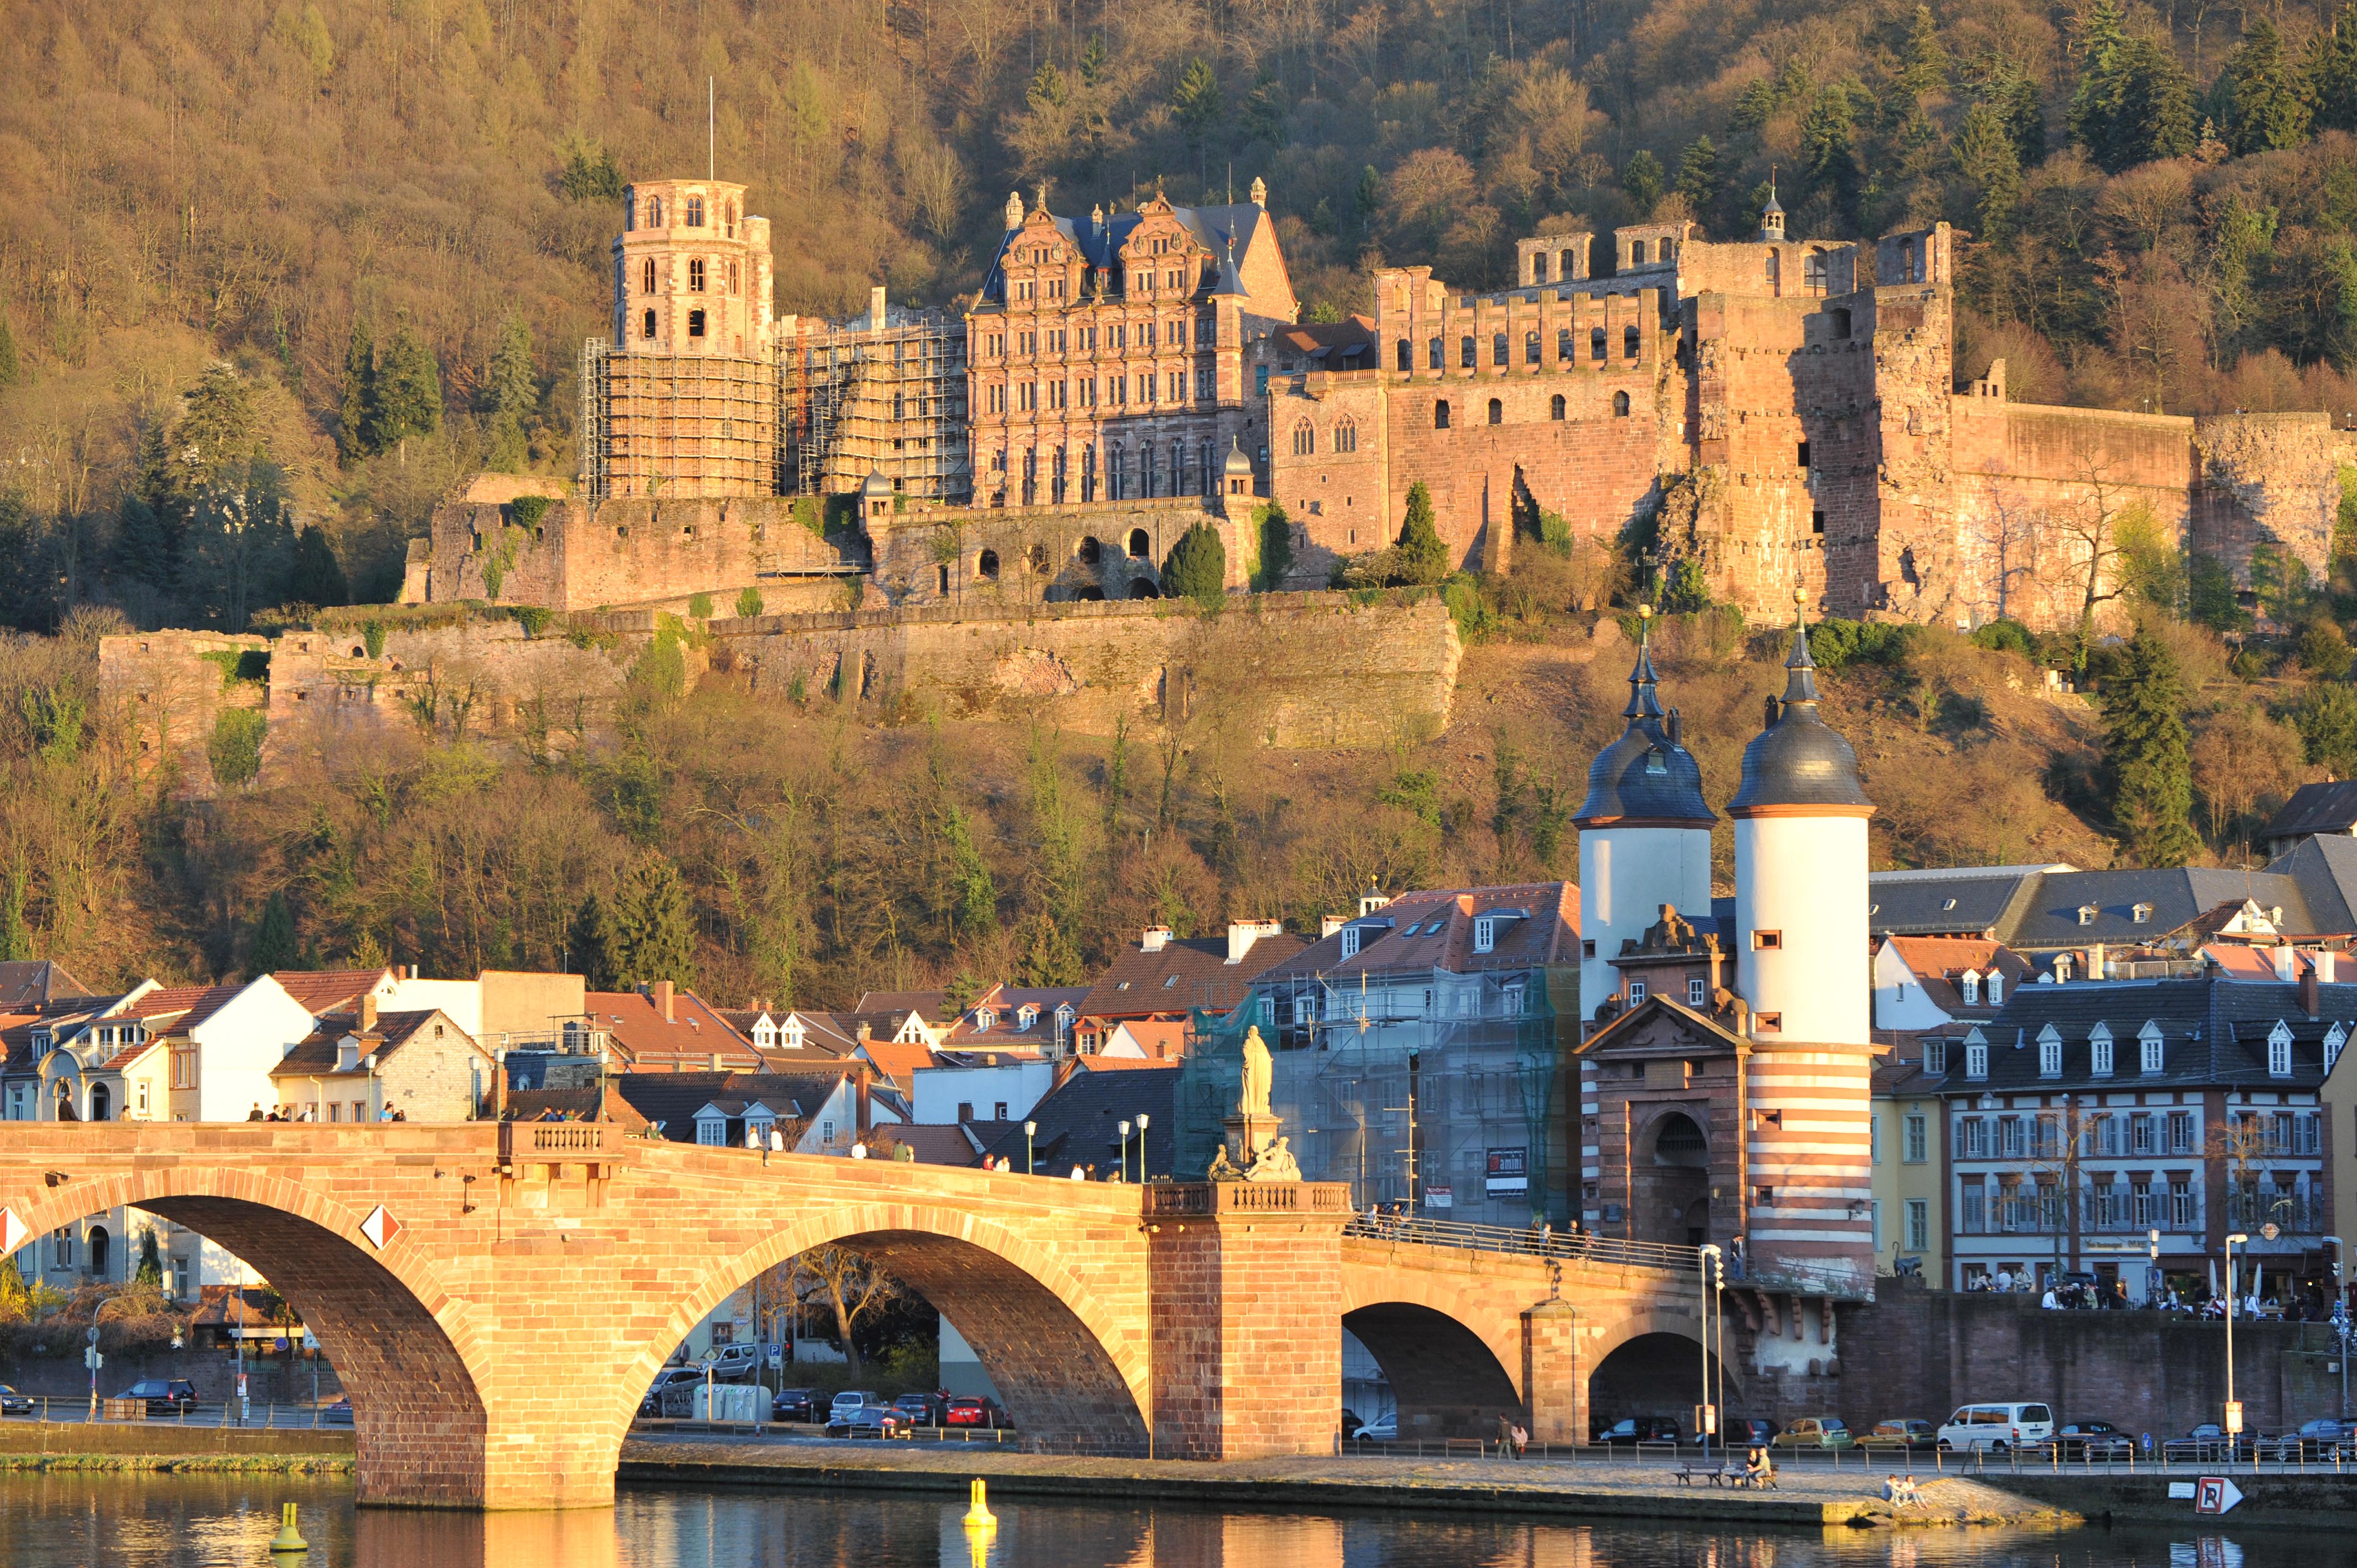 Heidelberg castle